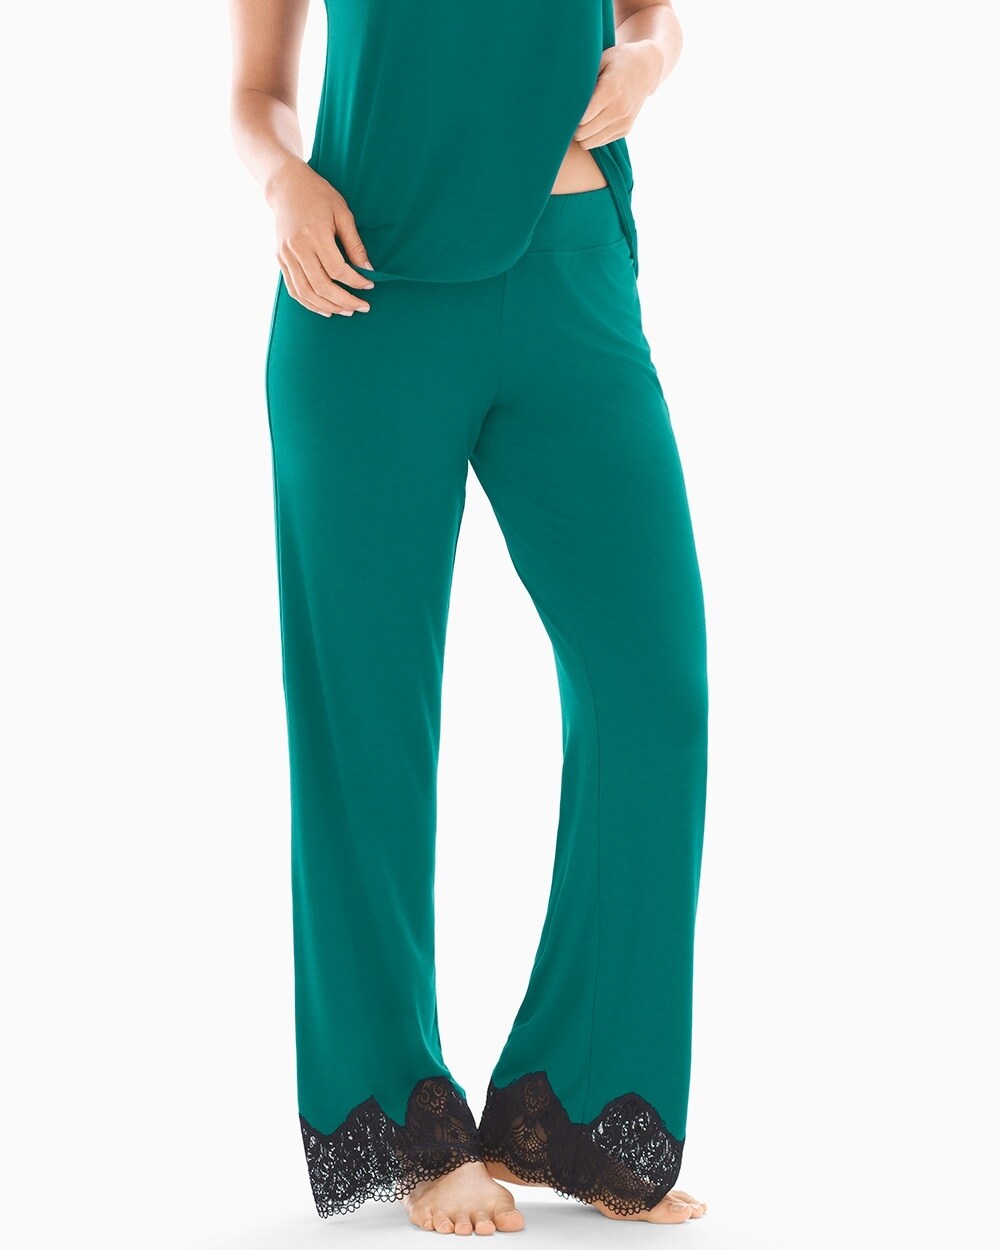 Regal Lace Pajama Pants Green Envy SH